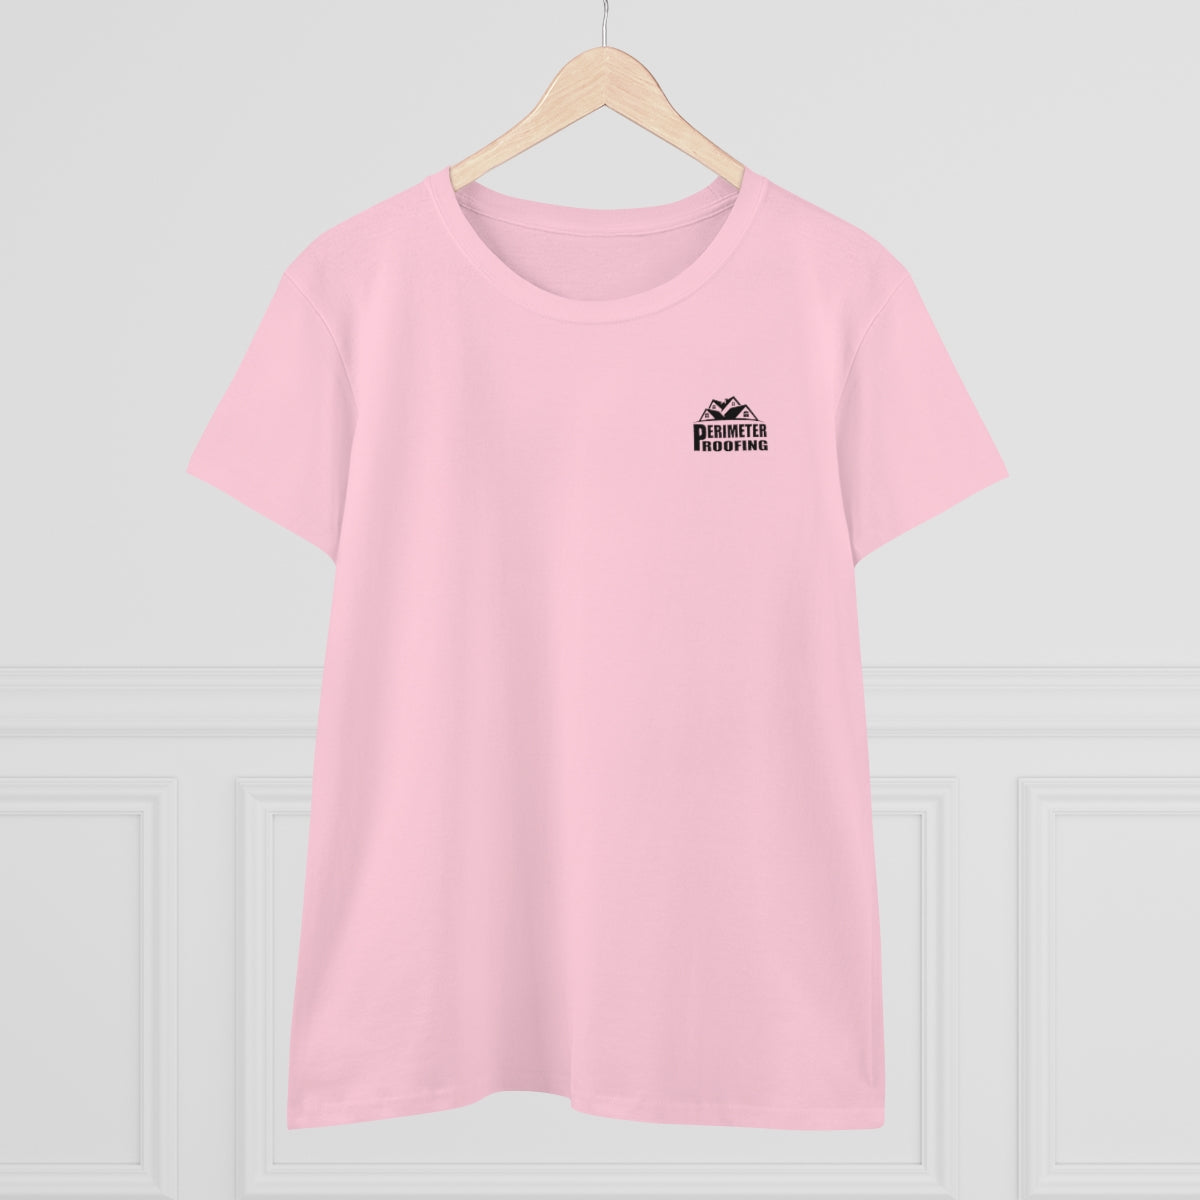 Copy of PERIMETER CARES Women's T-Shirt – Perimeter Roofing Merchandise